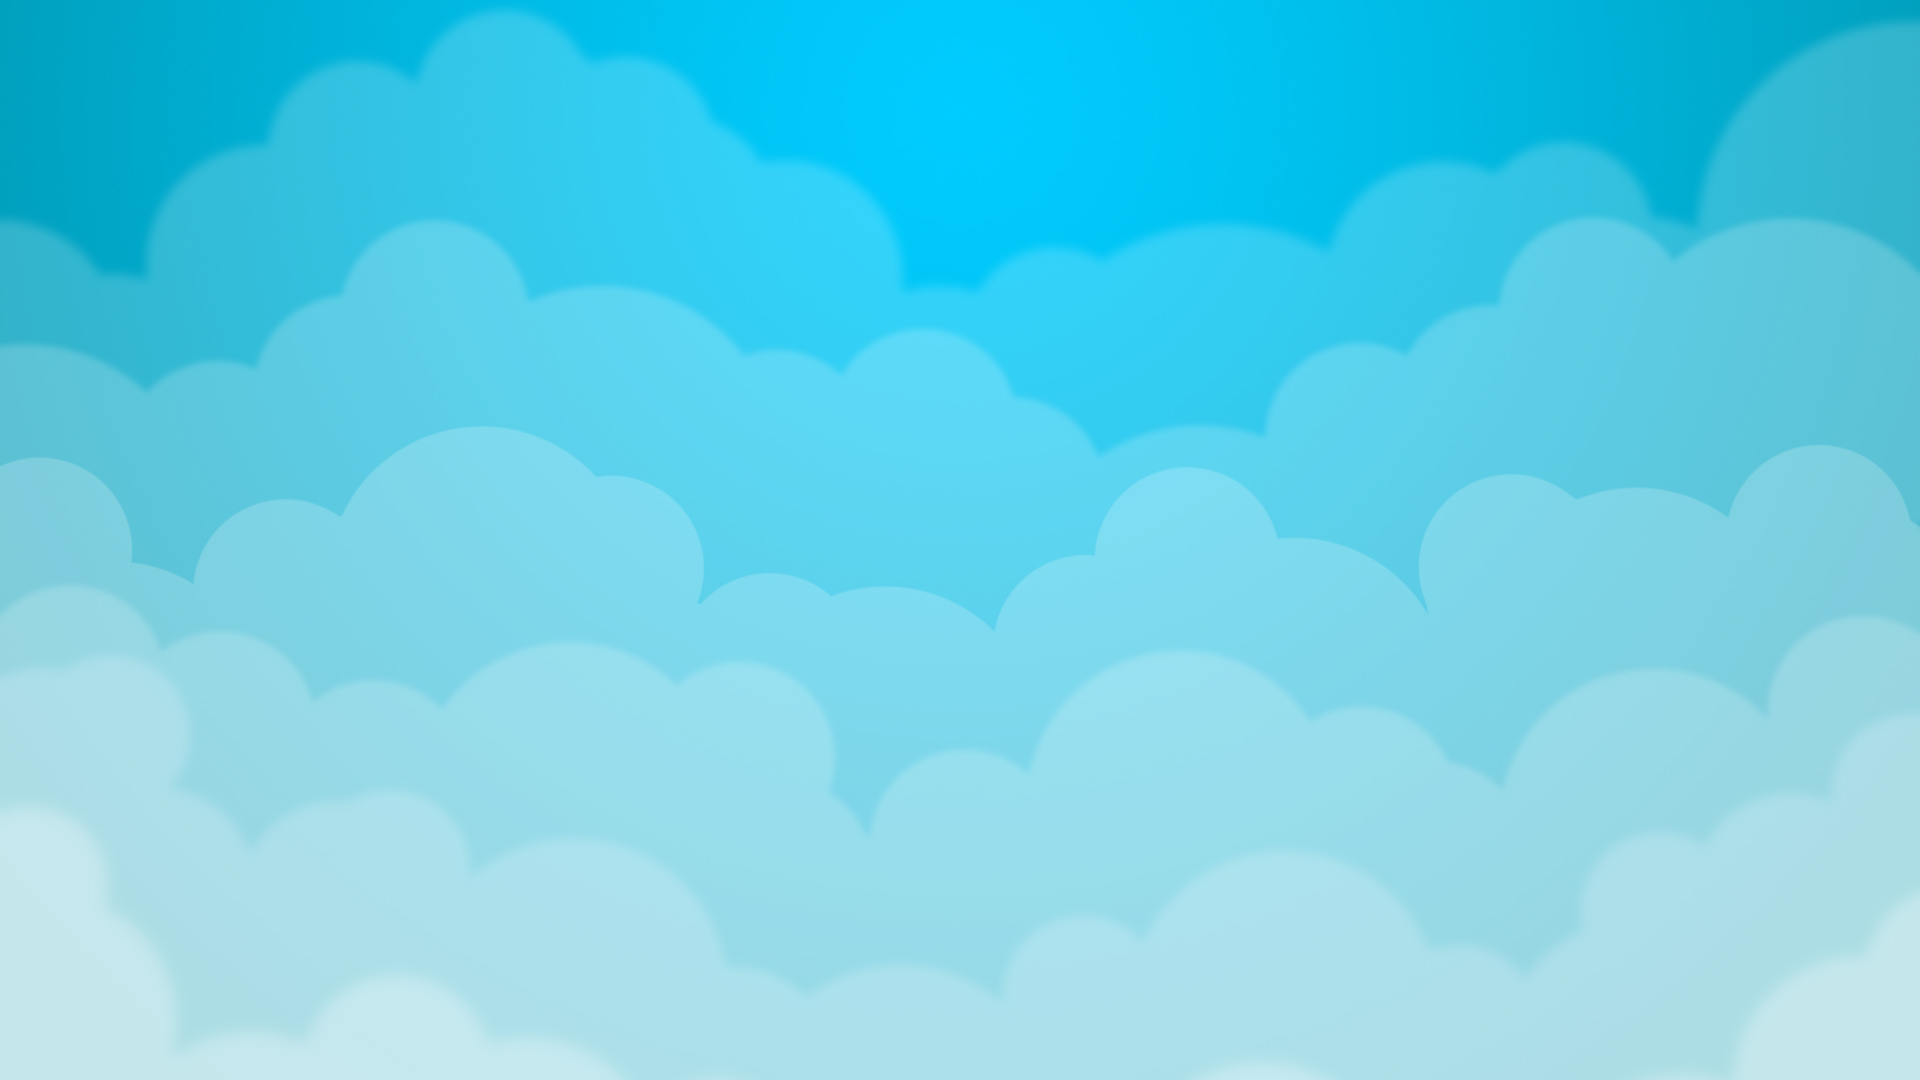 Blue Sky and Cloud Background Image JPEG